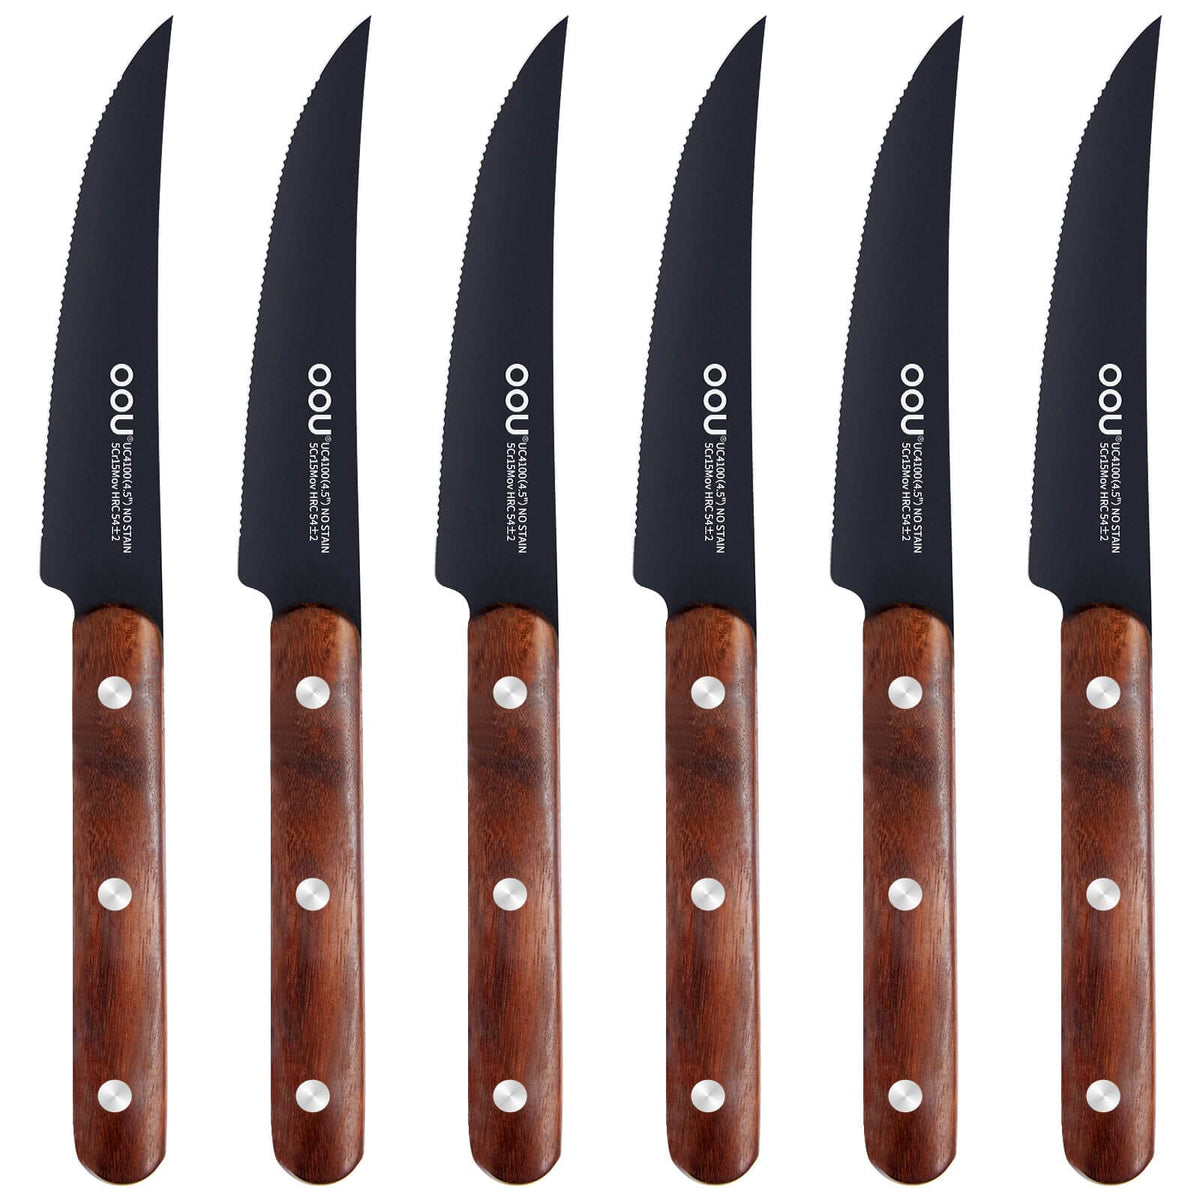 OOU! Kitchen Knife Set - OOU 6 pieces Professional Stainless Steel knife set,  Dishwasher Safe Kitchen Knives - Ultra Sharp Chef Knif